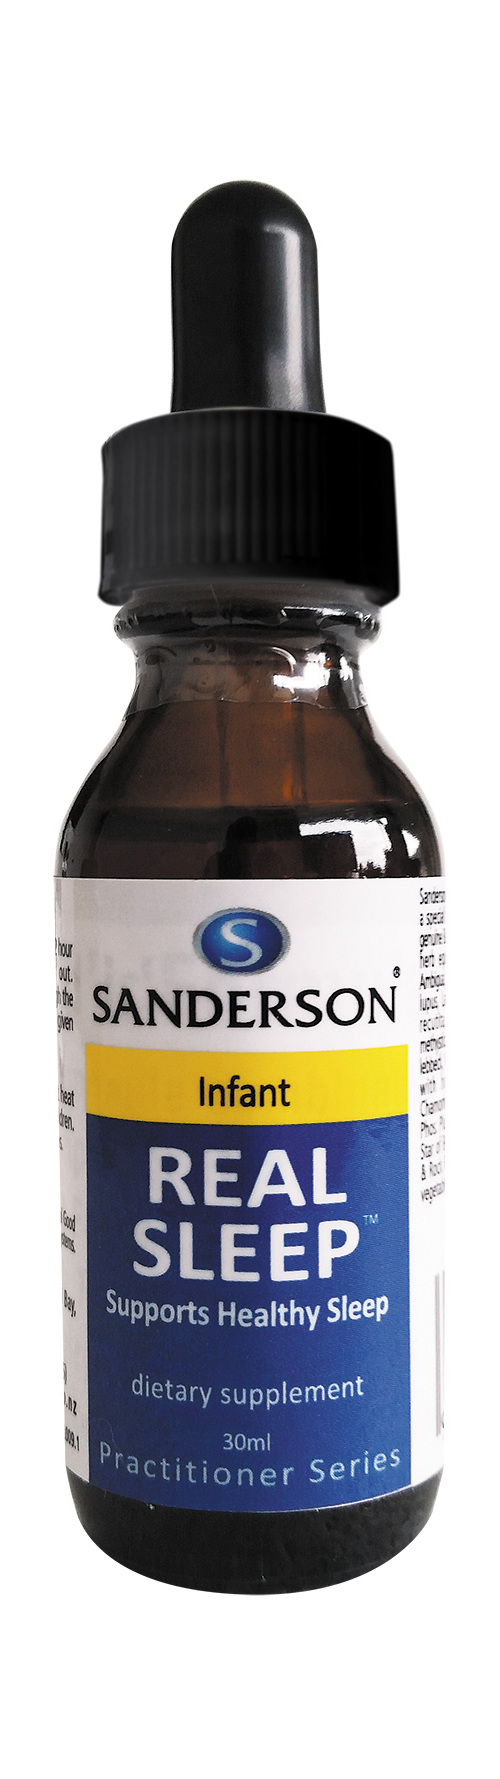 Sanderson Real Sleep Infant - 30Ml Dropper Bottle